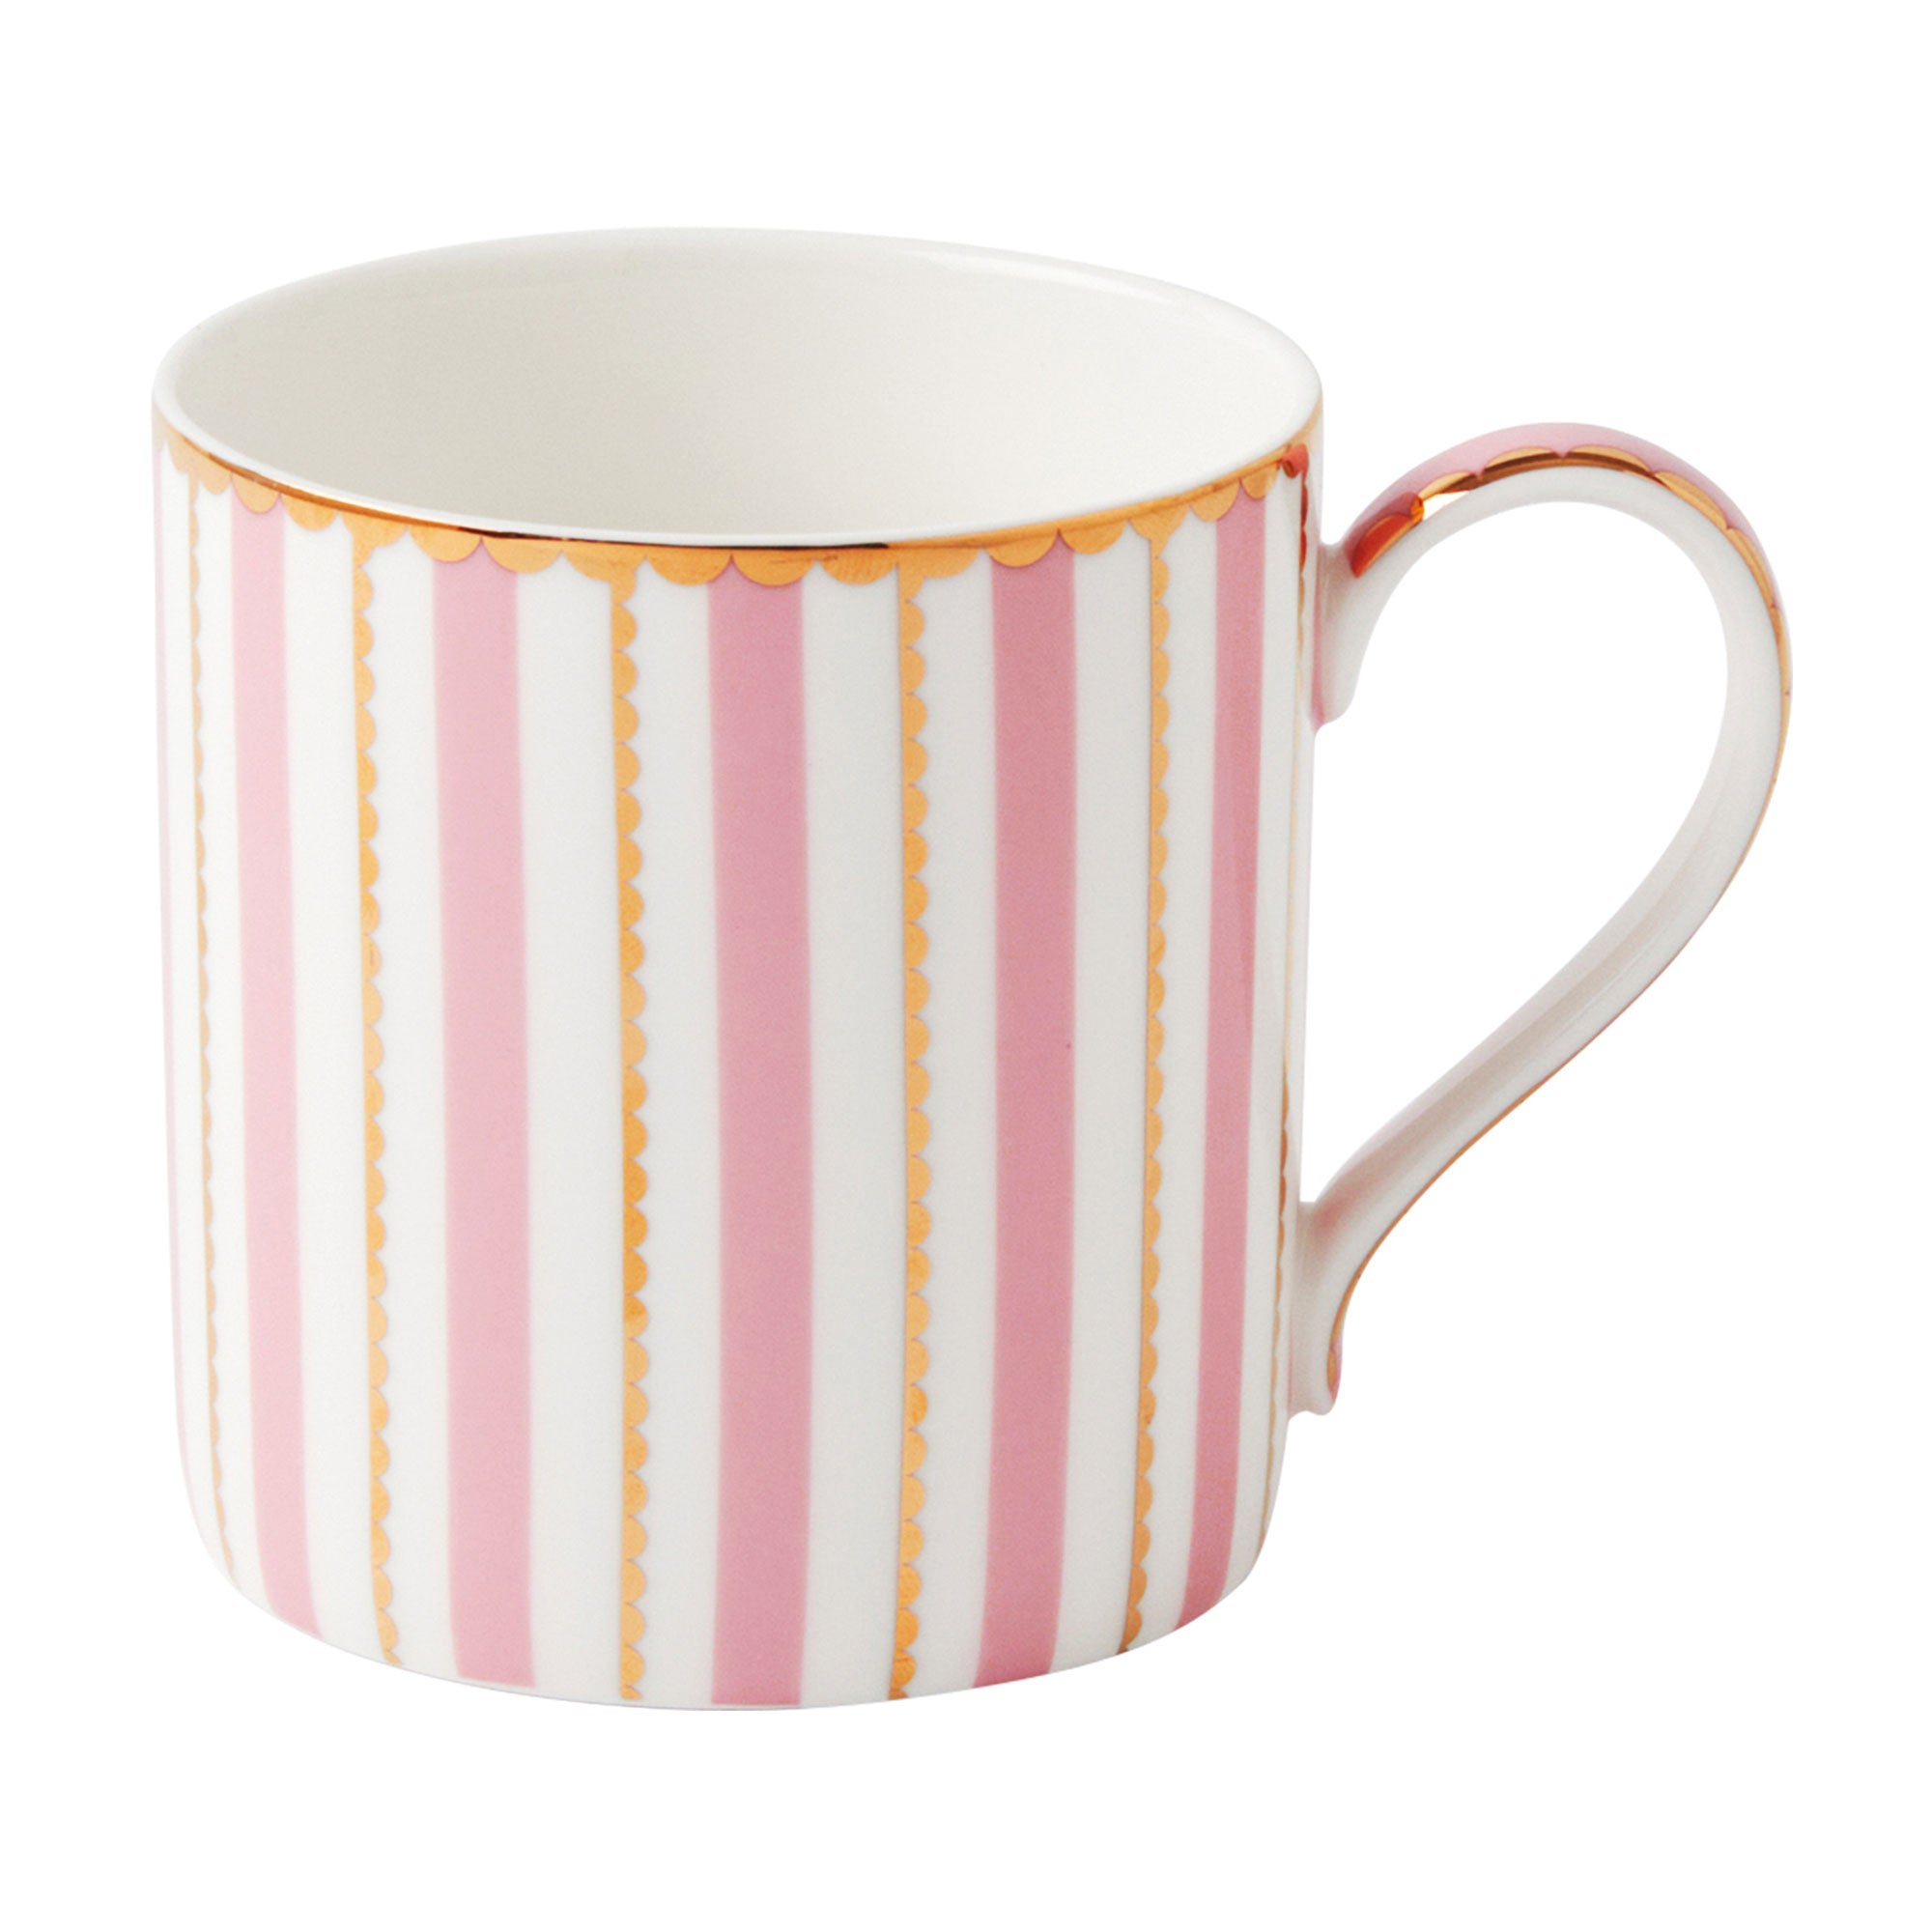 Maxwell & Williams - Teas's & C's Regency Pink Mug